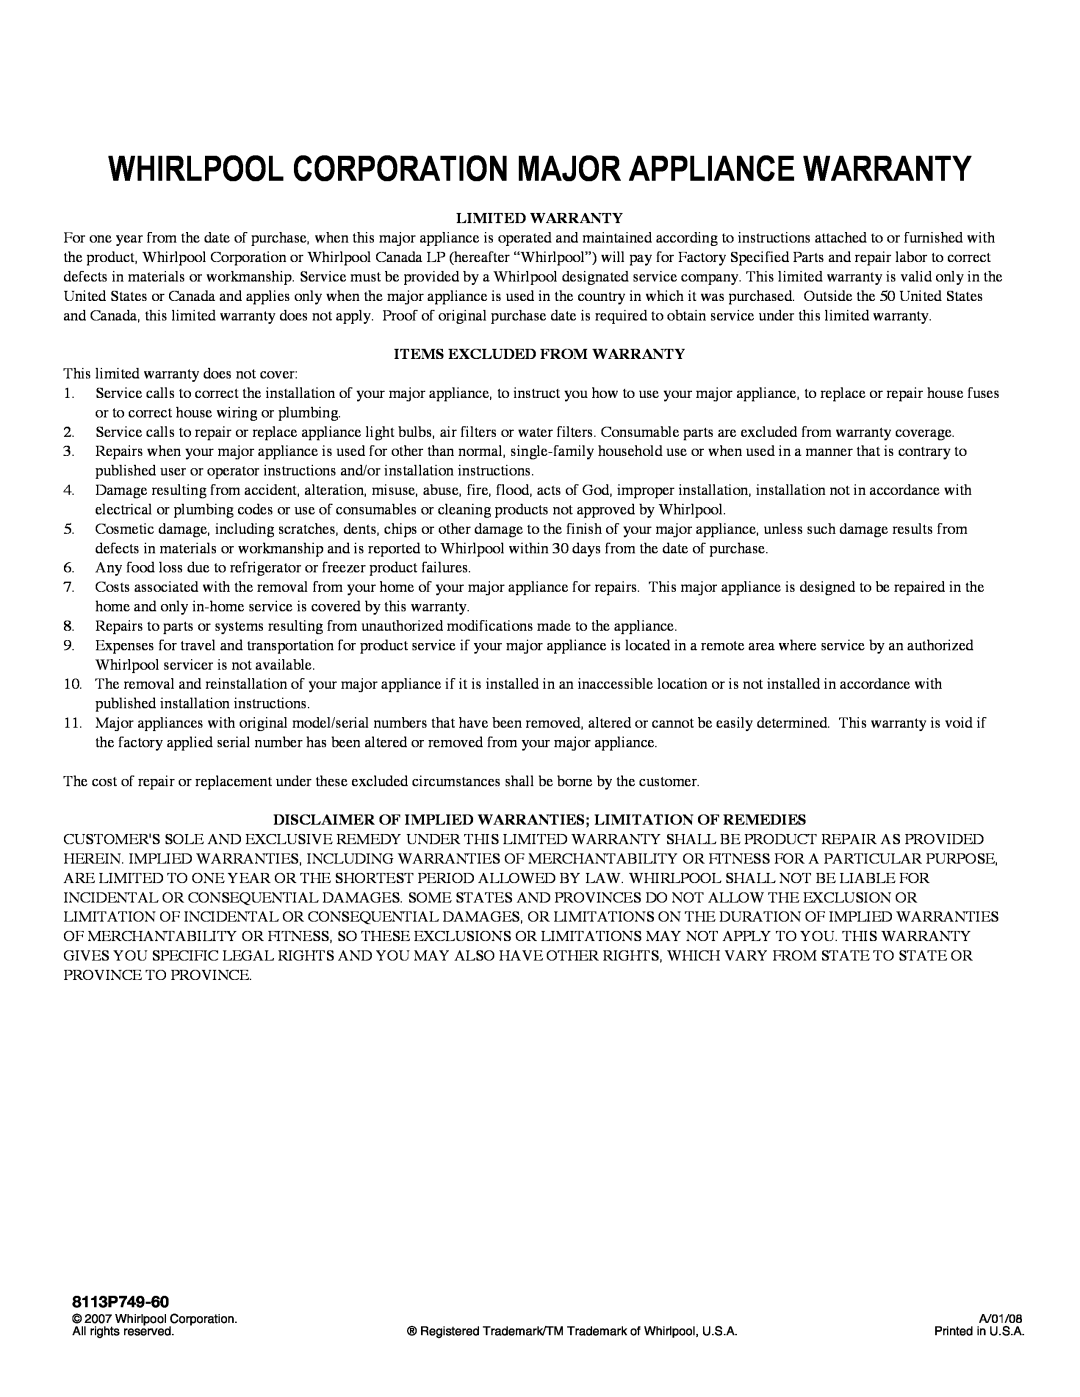 Whirlpool 8113P749-60 manual Whirlpool Corporation Major Appliance Warranty, Limited Warranty, Items Excluded From Warranty 